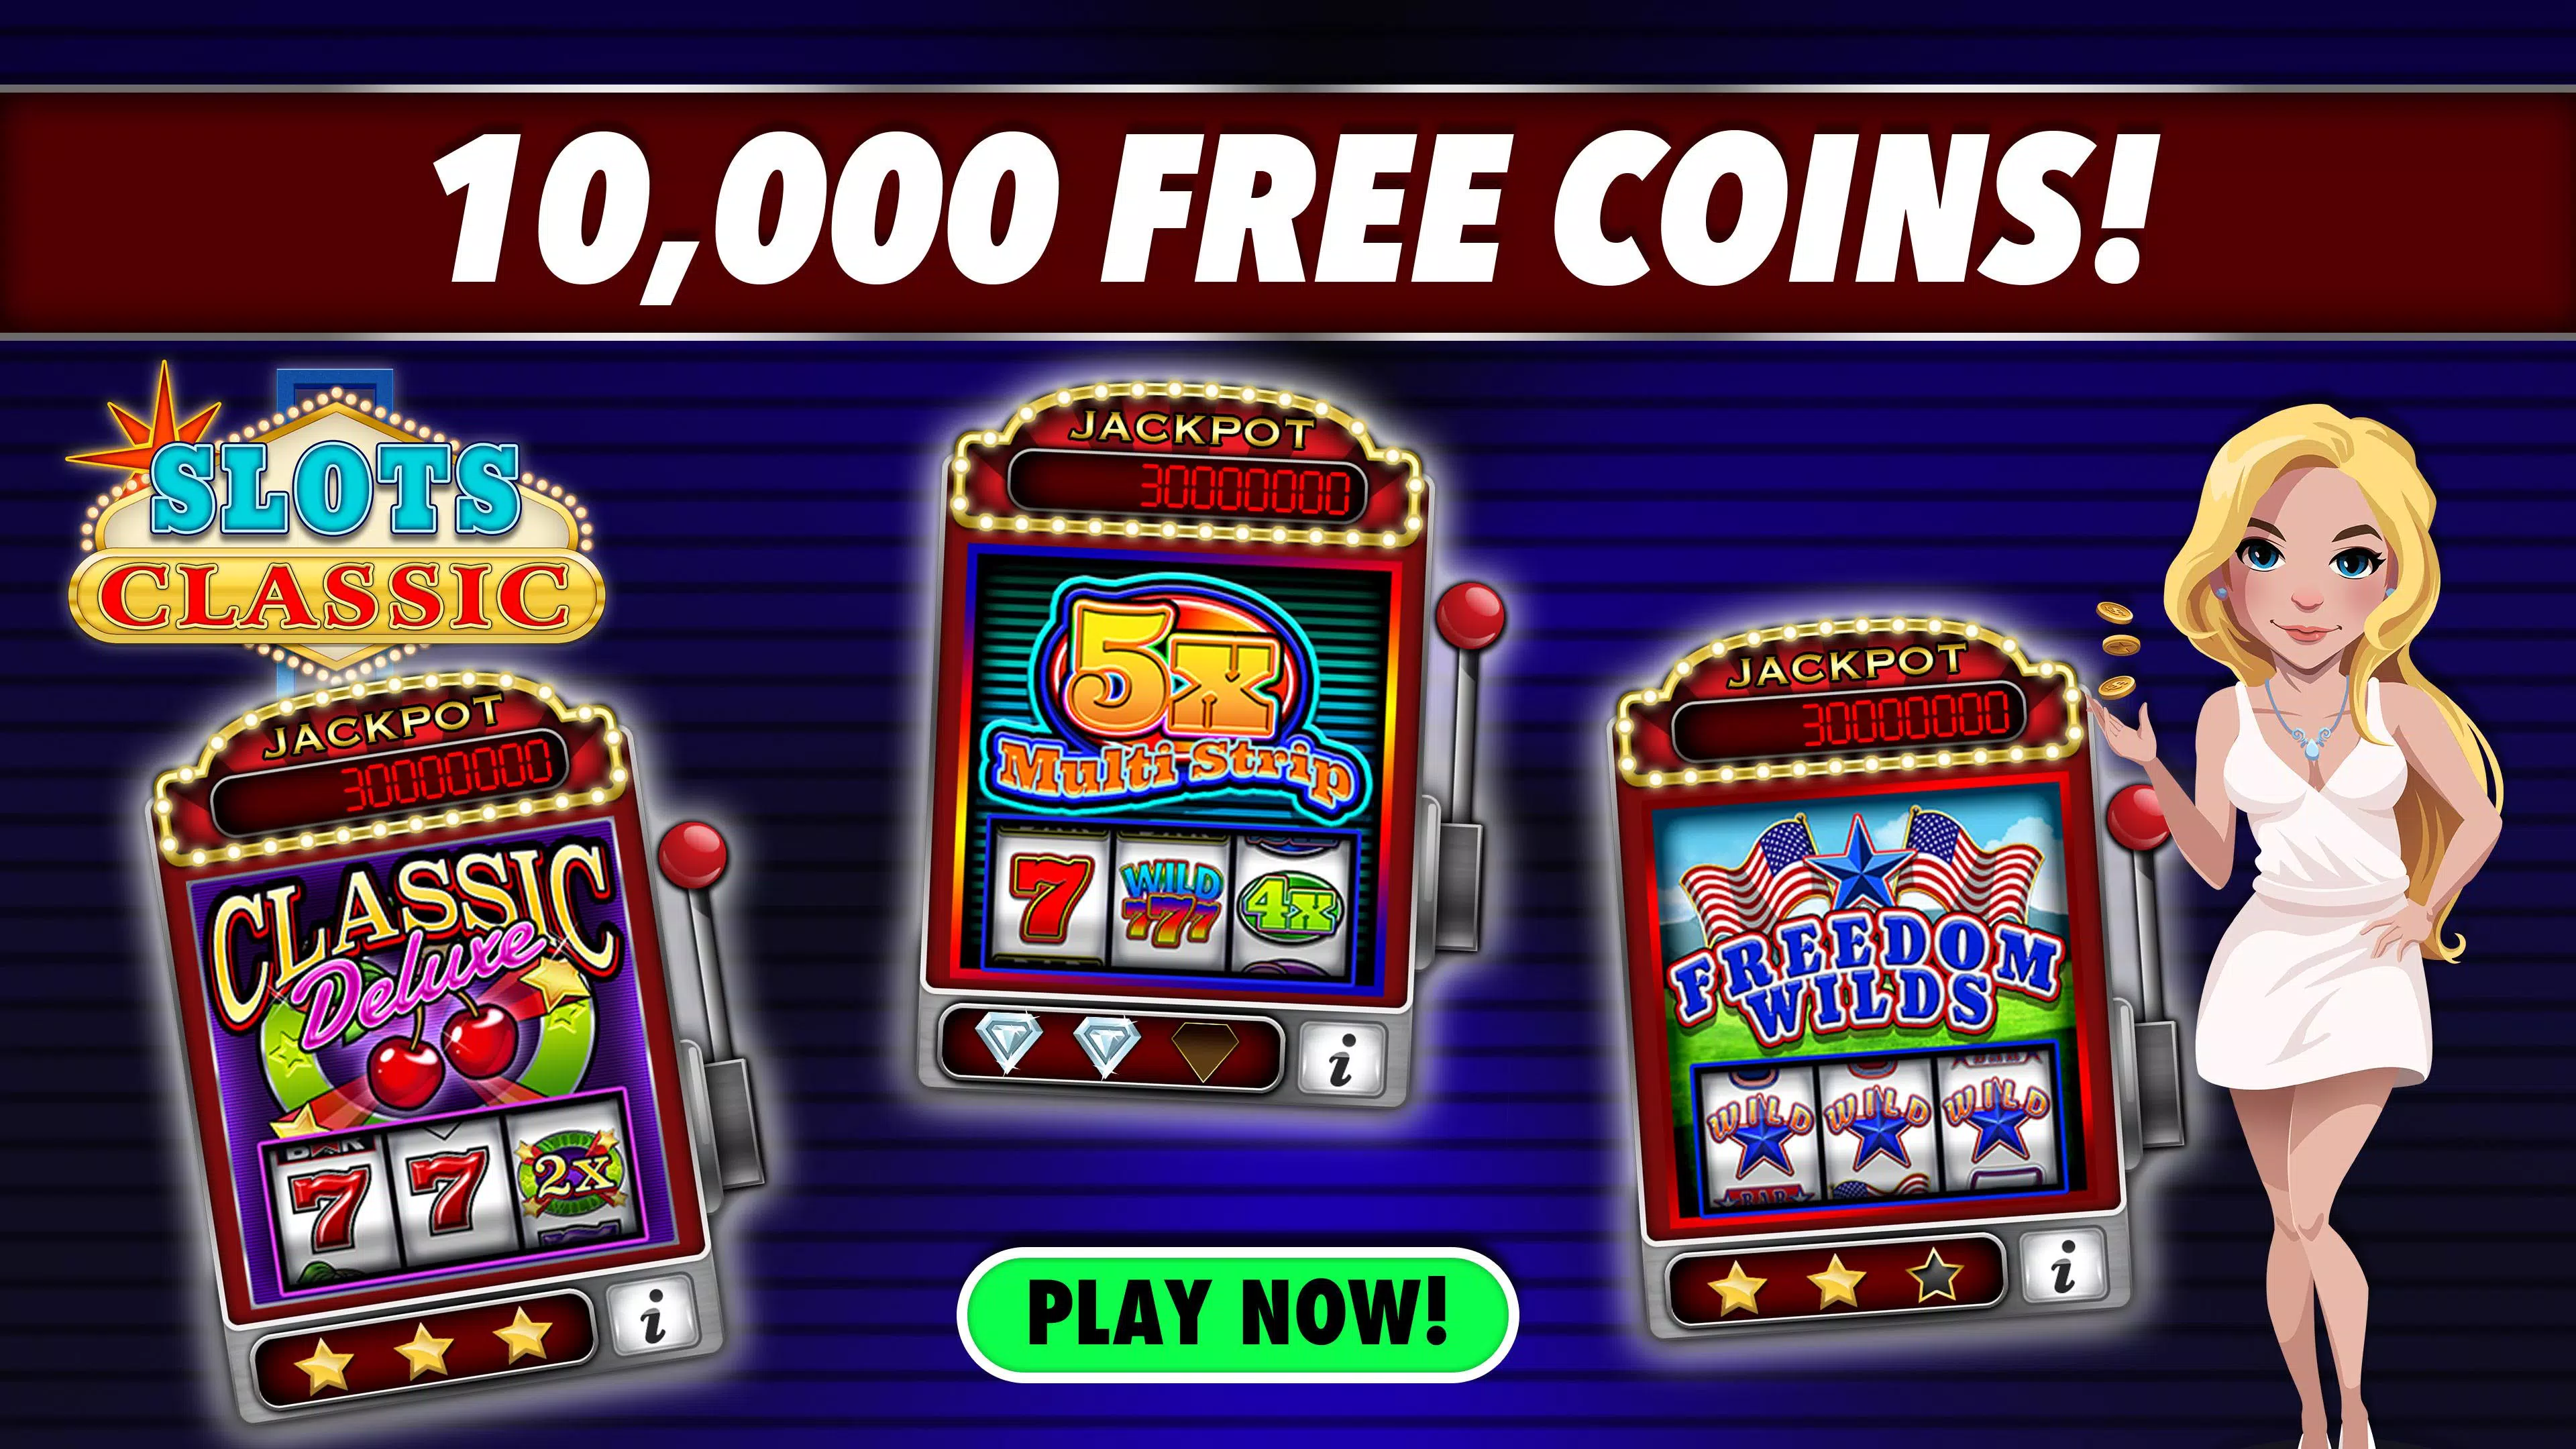 Casino online free games bonus slots какими картами играть на 5 арене